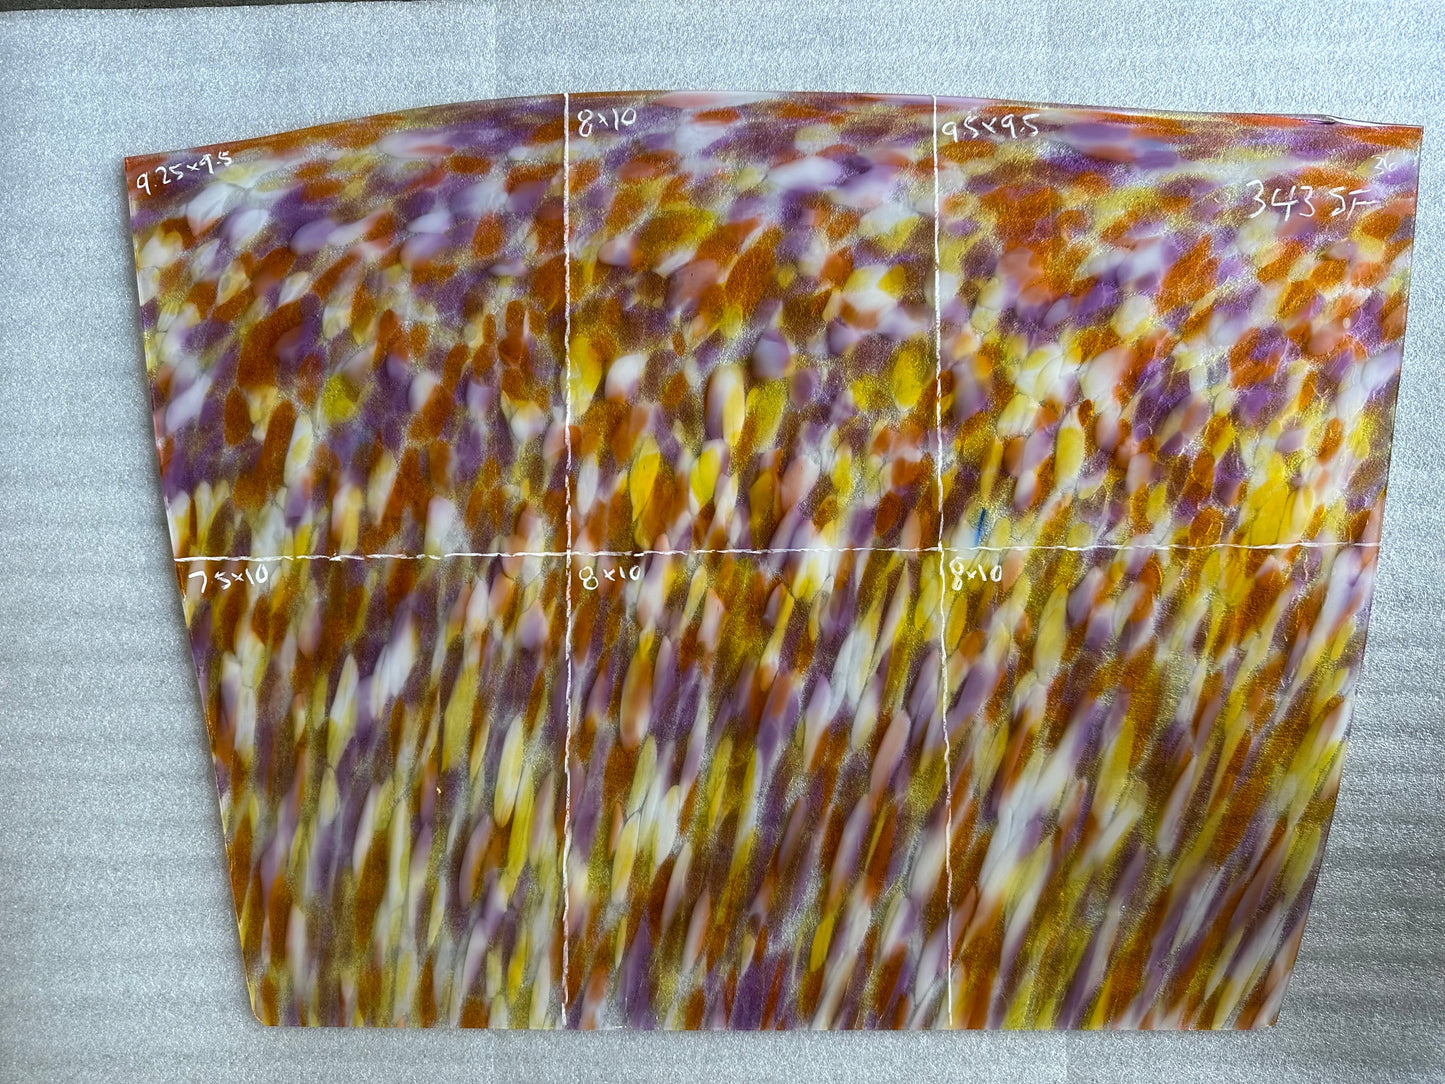 P2 343 SF Tangerine/yellow/lavender/white on transparent